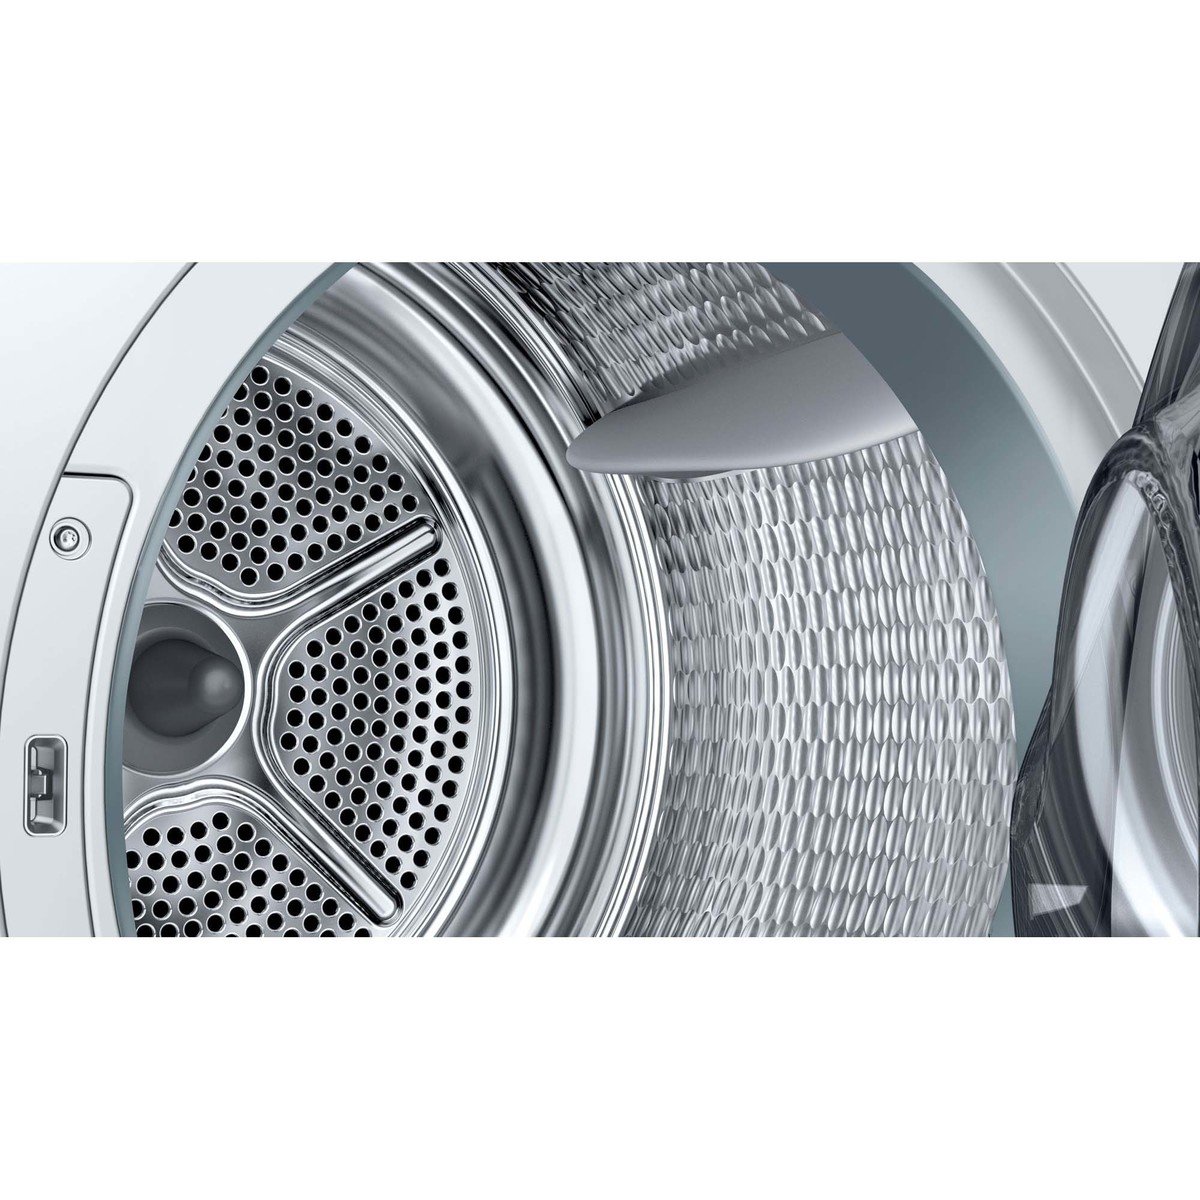 Bosch Front Load Condenser Dryer WTG86400GC 8KG